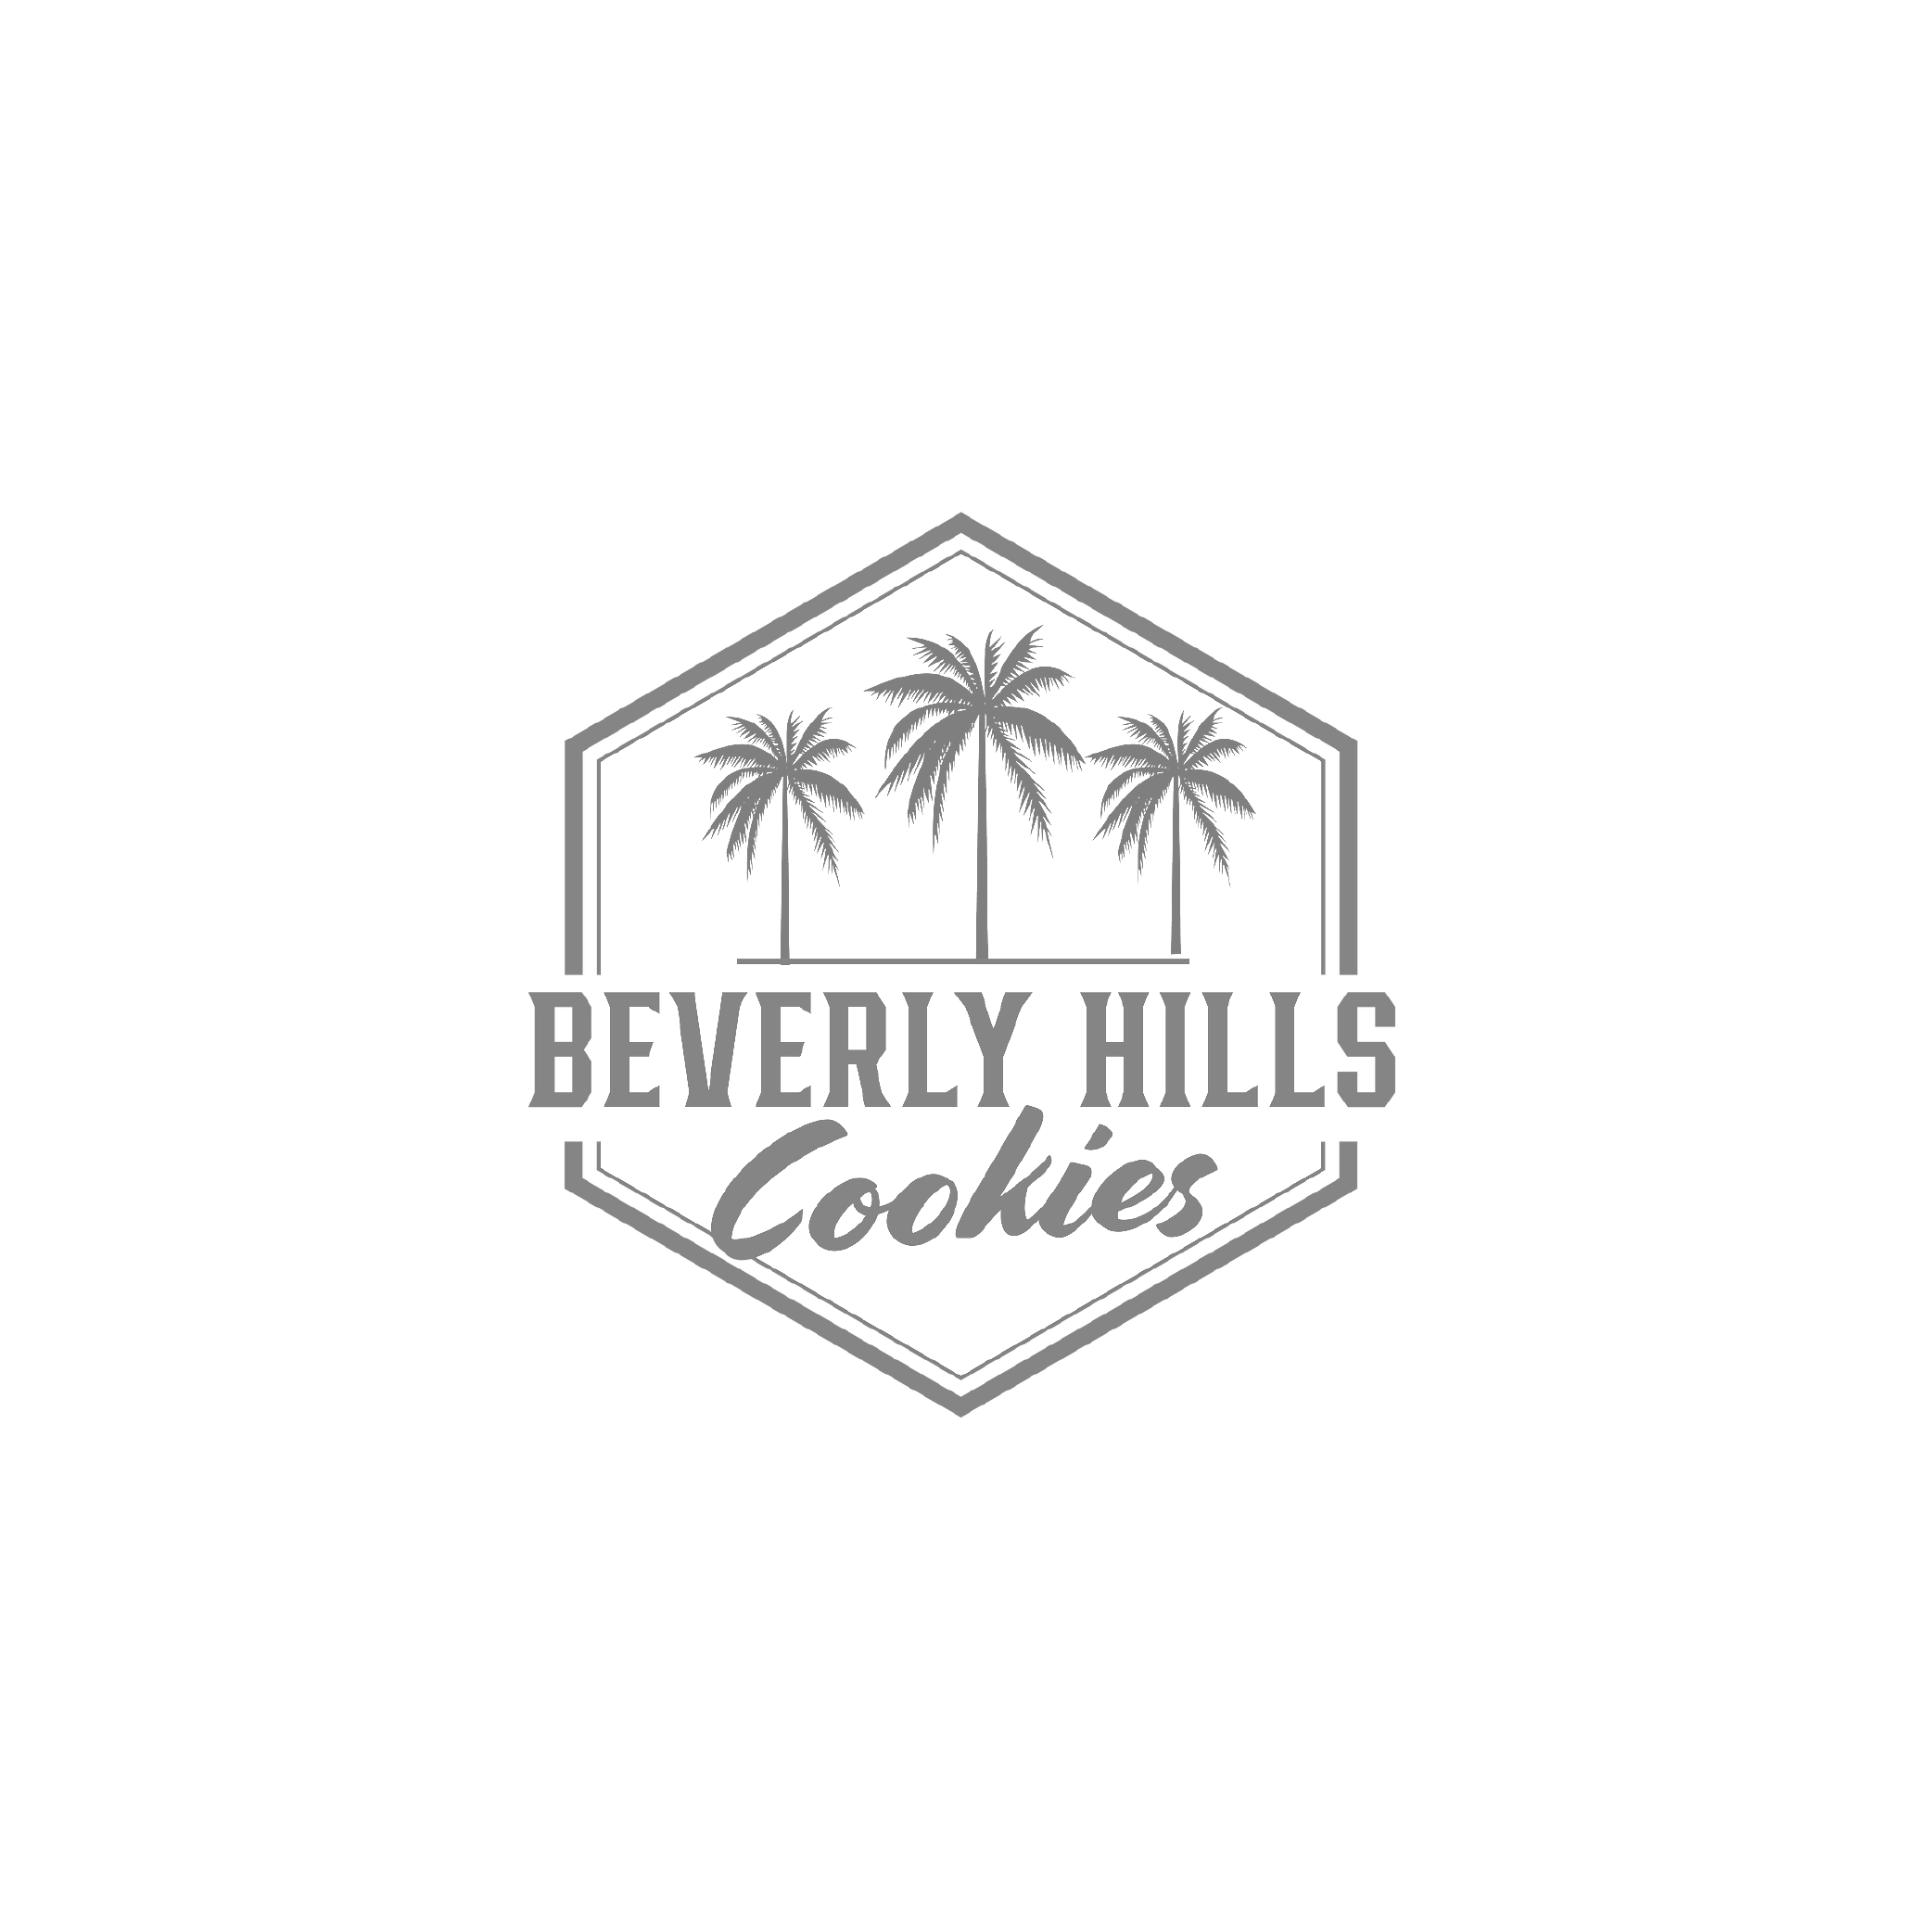 Beverly Hills Cookies